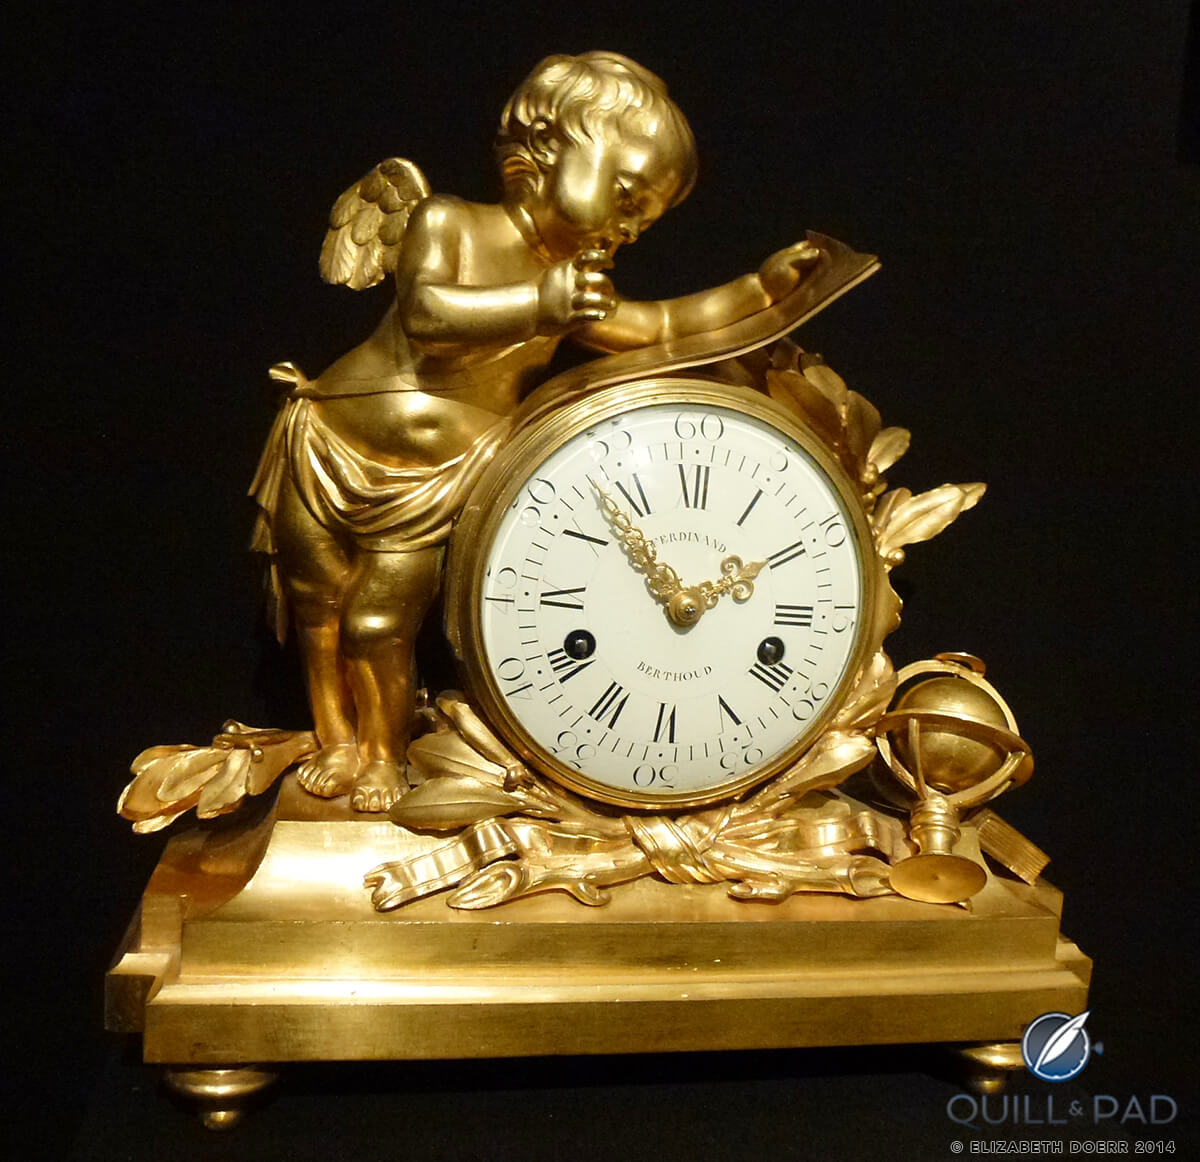 Table clock by legendary French watchmaker Ferdinand Berthoud 1727-1807